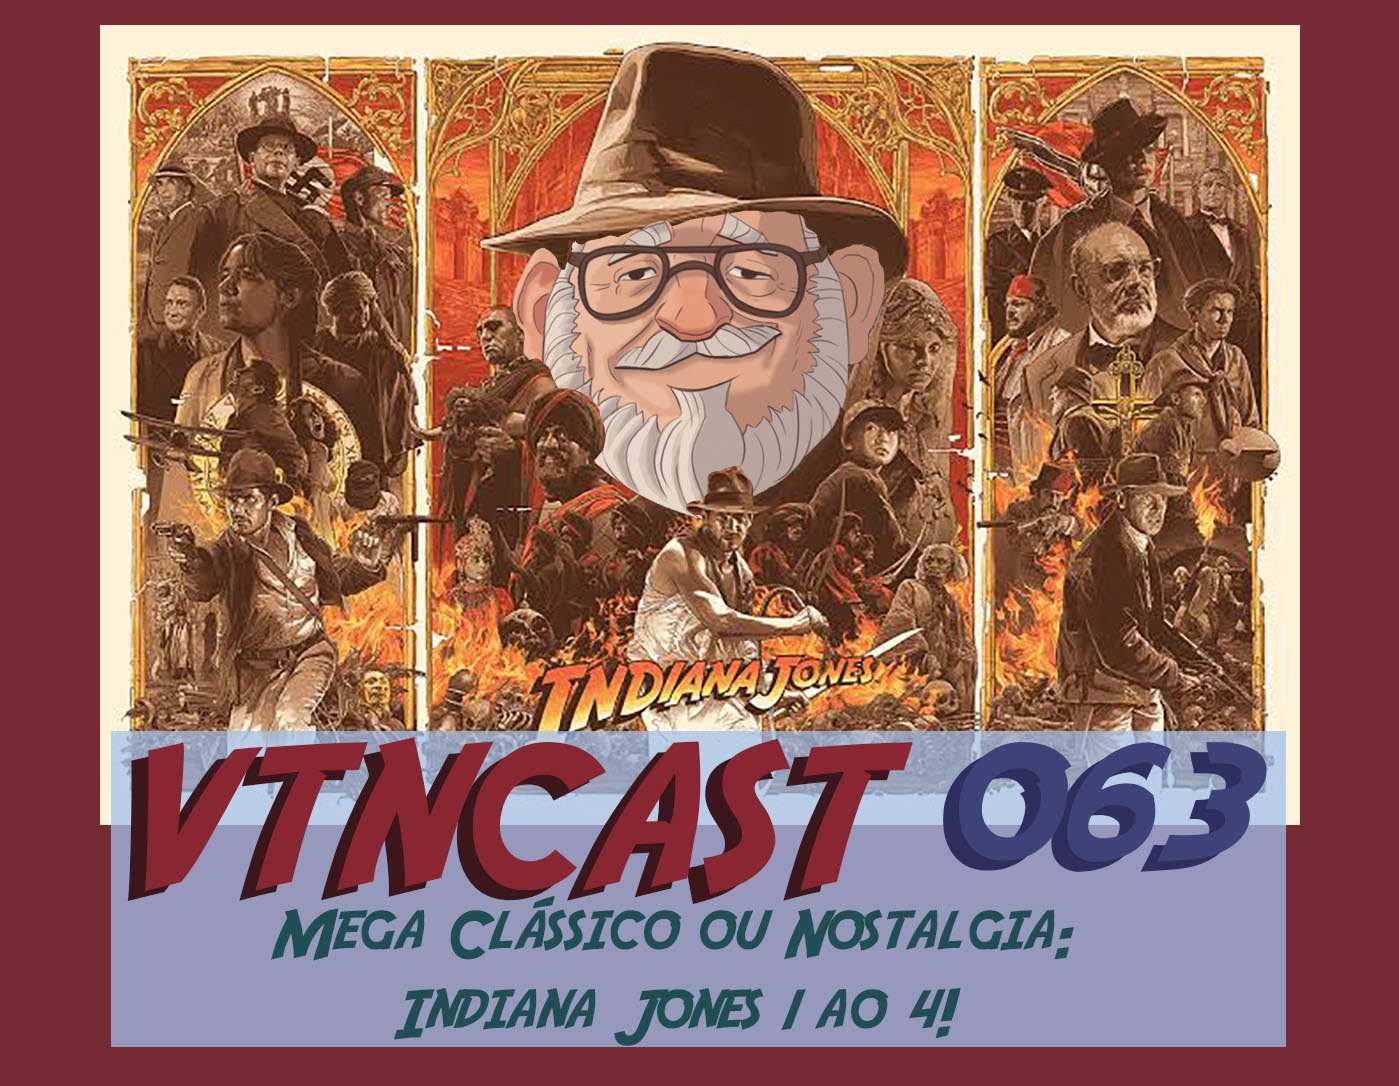 VTNCast 063 – Mega Clássico ou Nostalgia: Idiana Jones 1 ao 4! post thumbnail image